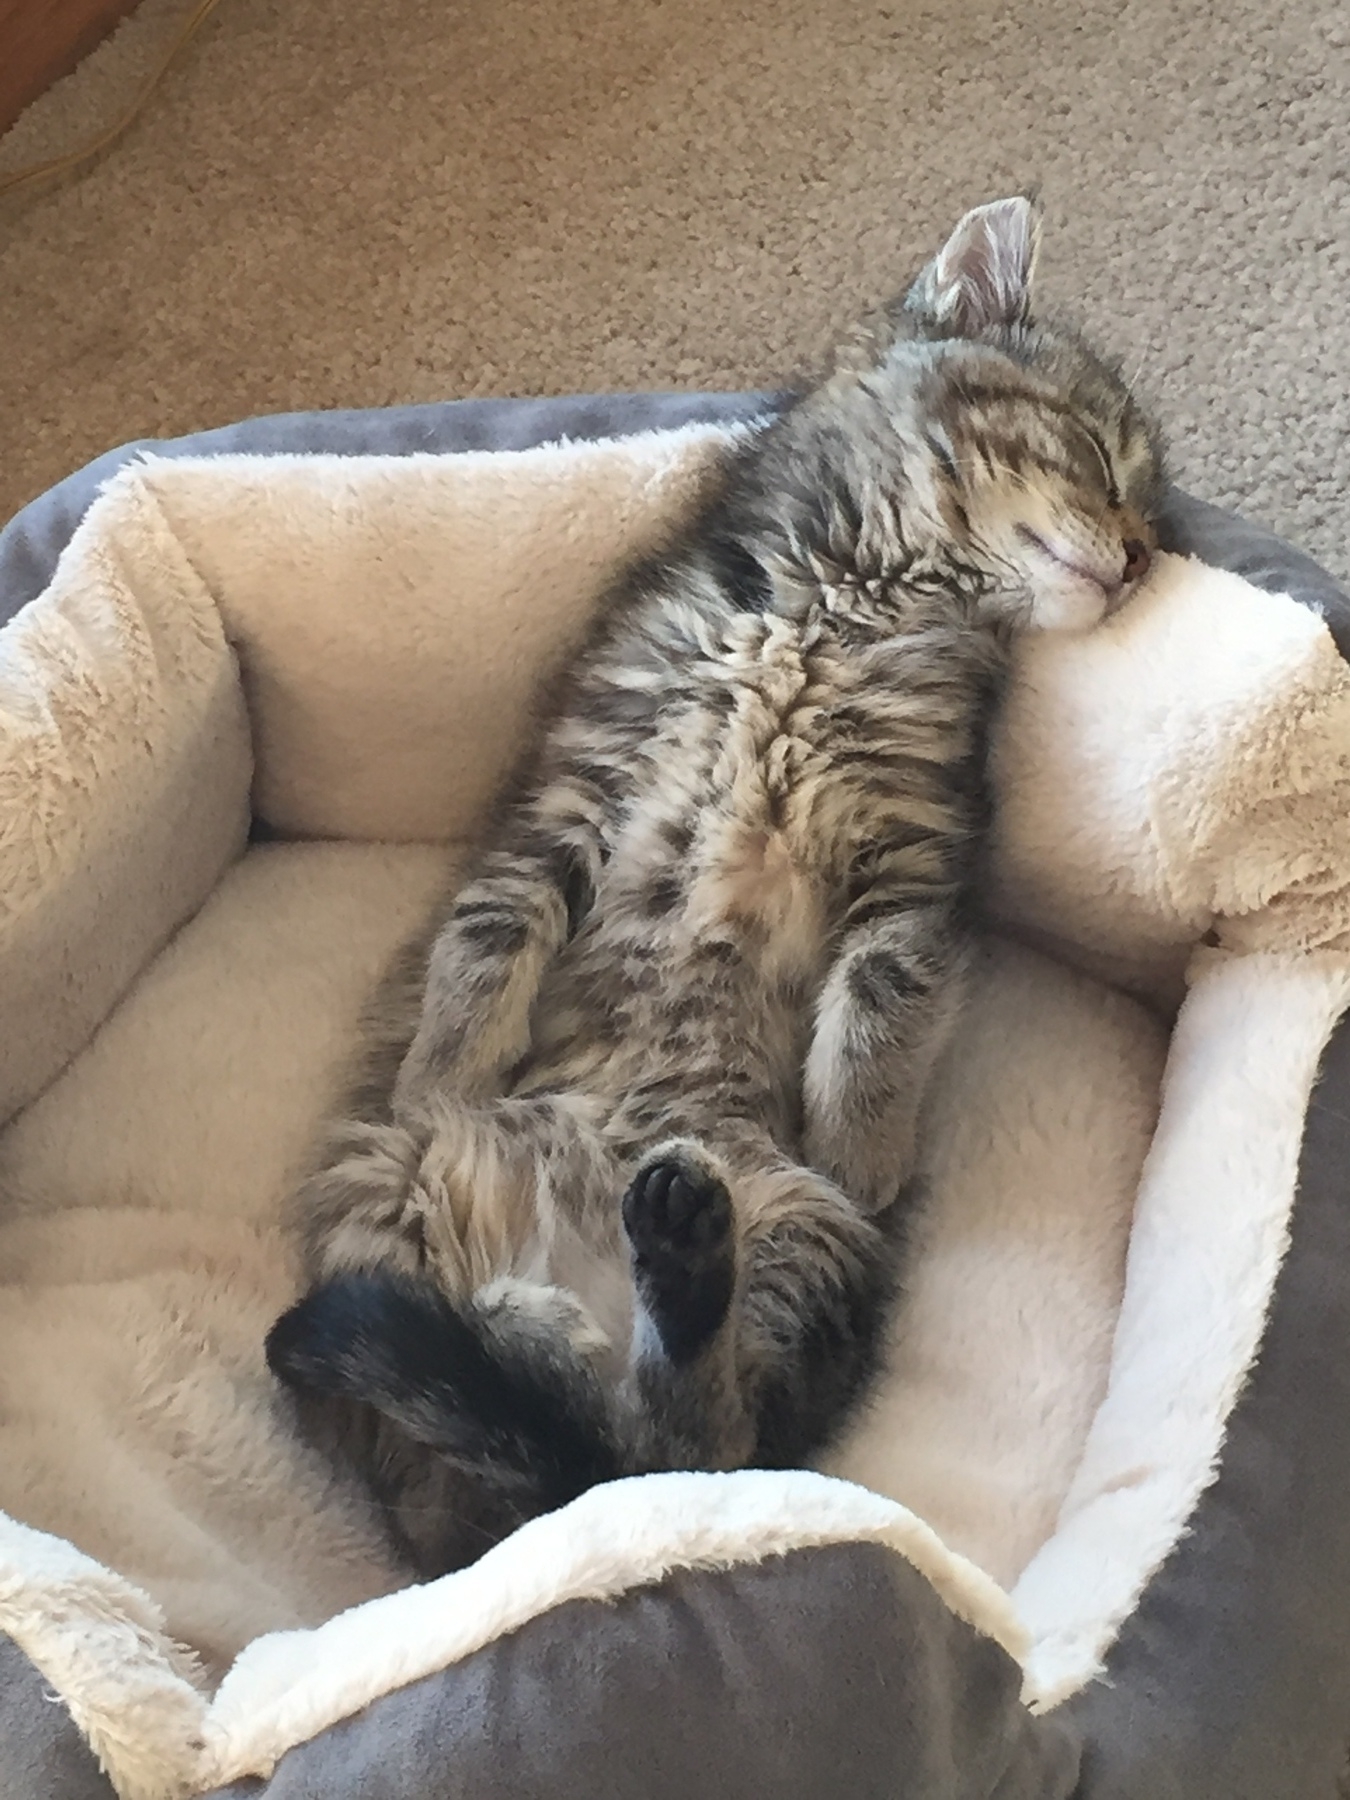 Molly as a kitten sleeping in her bed. 